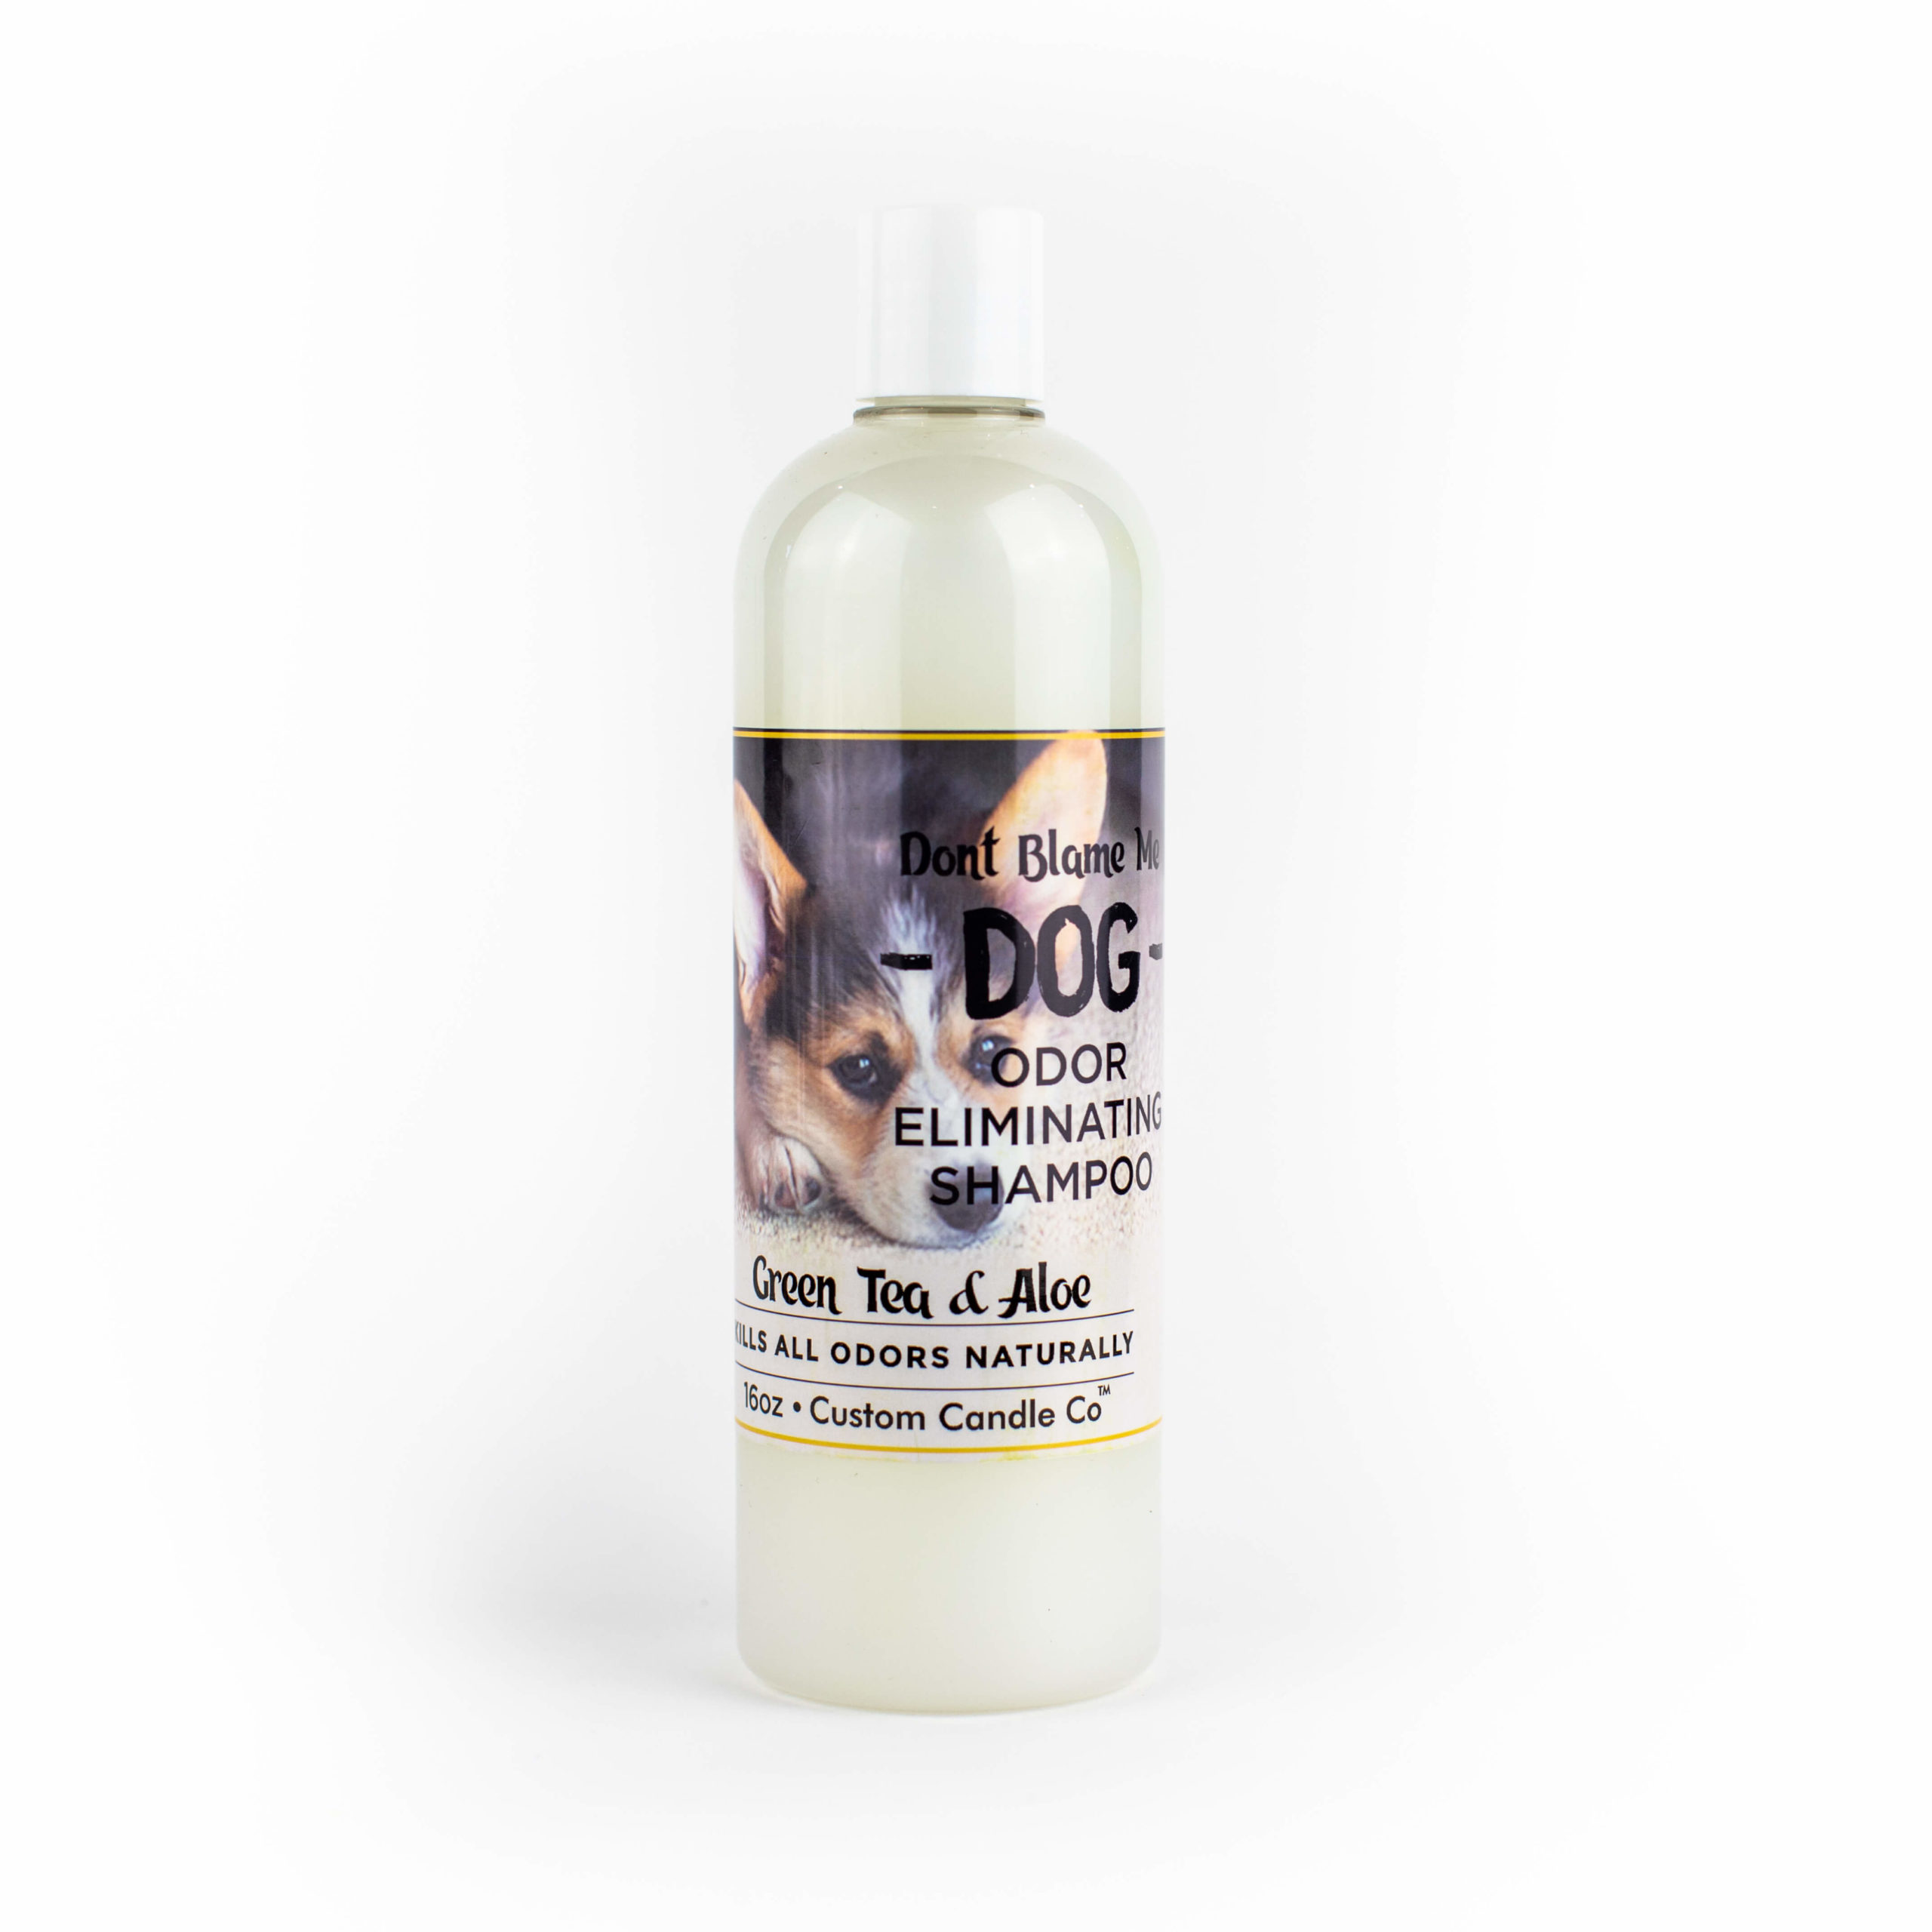 A bottle of Dog Shampoo - Green Tea Aloe 16-oz on a white background.